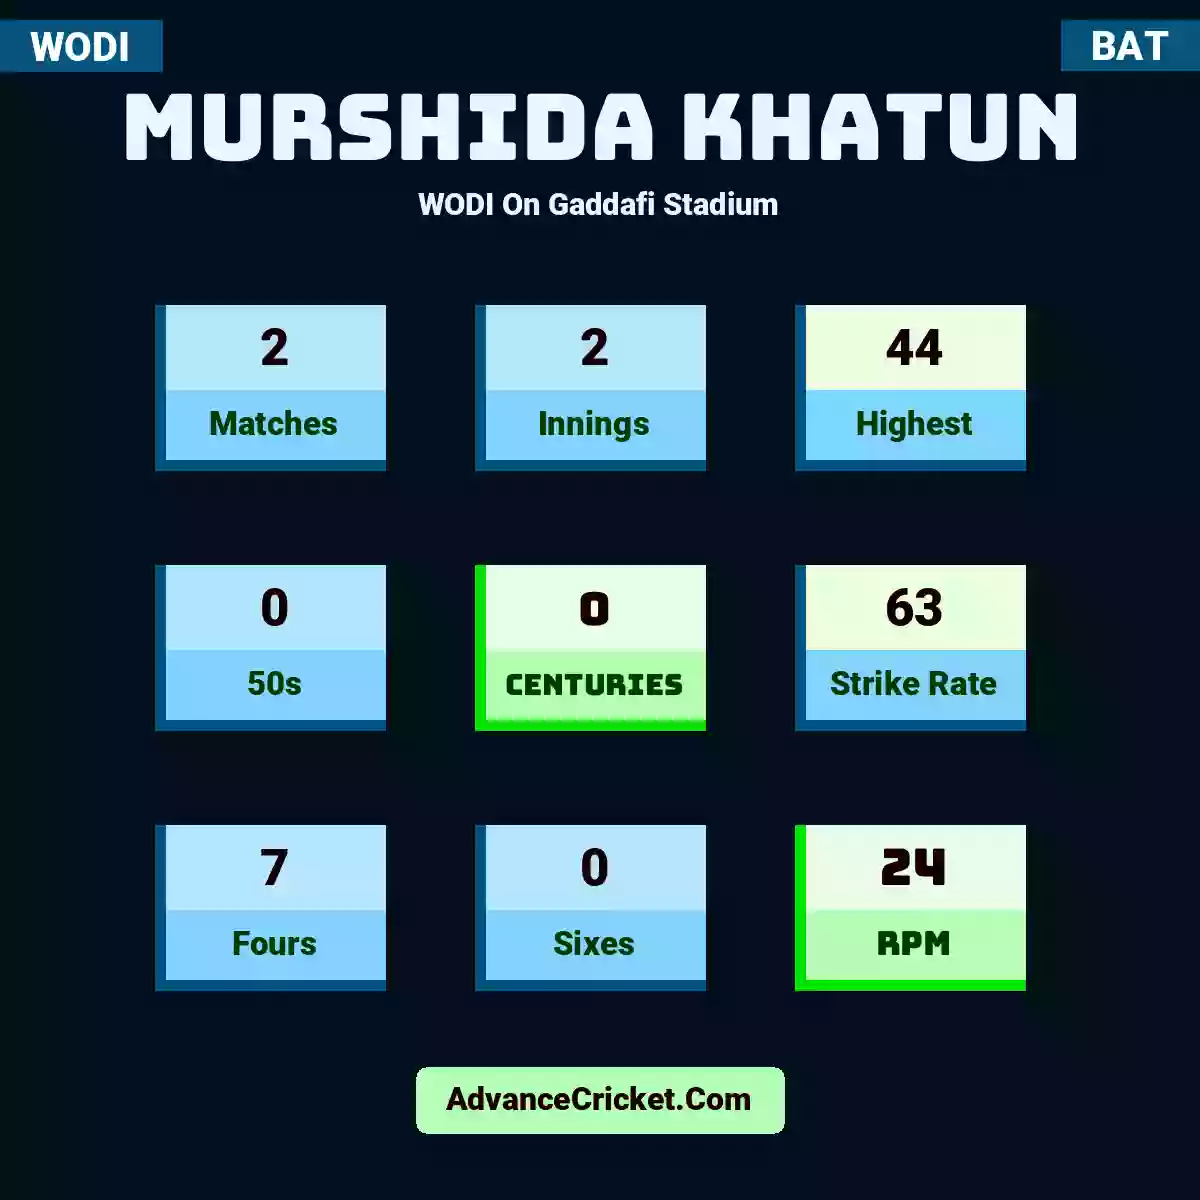 Murshida Khatun WODI  On Gaddafi Stadium, Murshida Khatun played 2 matches, scored 44 runs as highest, 0 half-centuries, and 0 centuries, with a strike rate of 63. M.Khatun hit 7 fours and 0 sixes, with an RPM of 24.